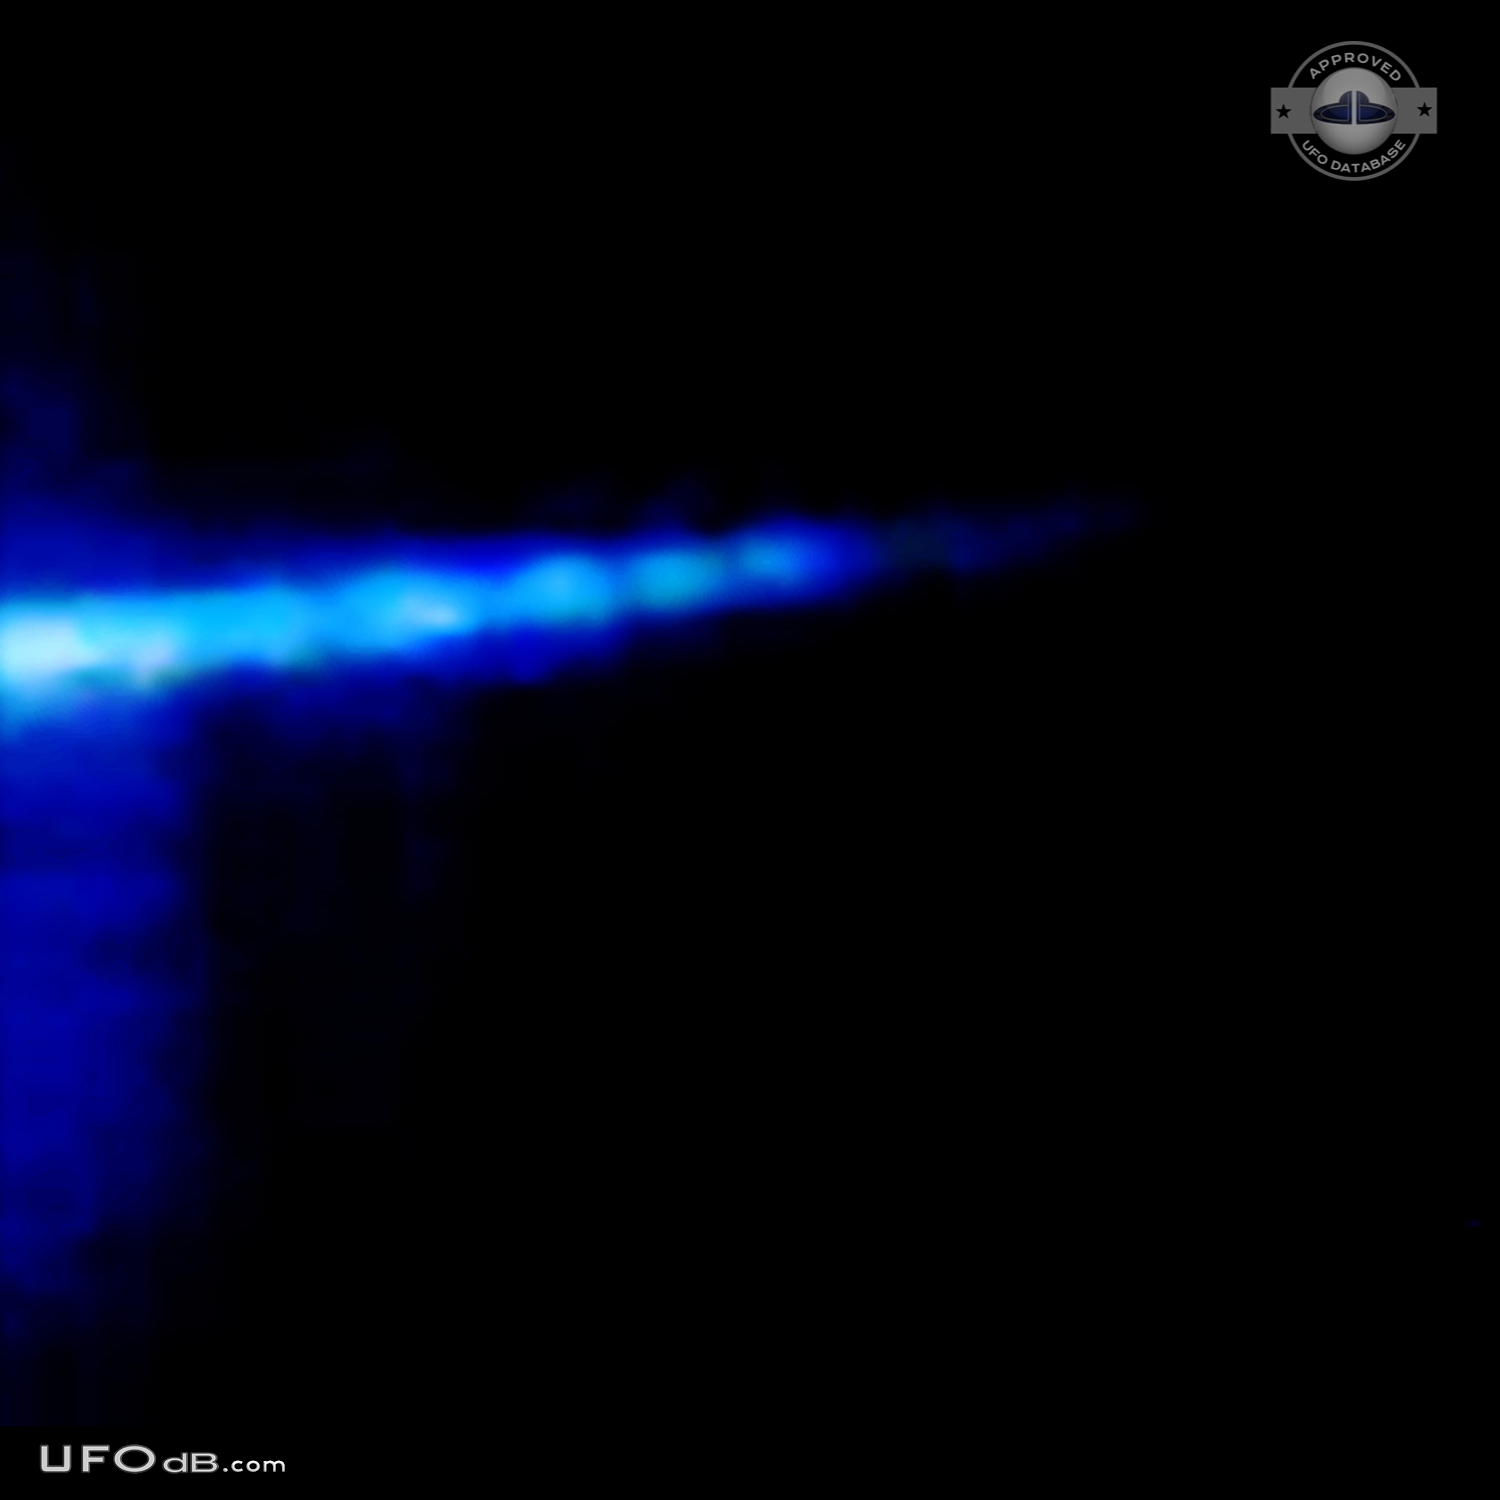 Explosive burst of light in sky with saucer UFO - Kingman Arizona 2012 UFO Picture #538-3